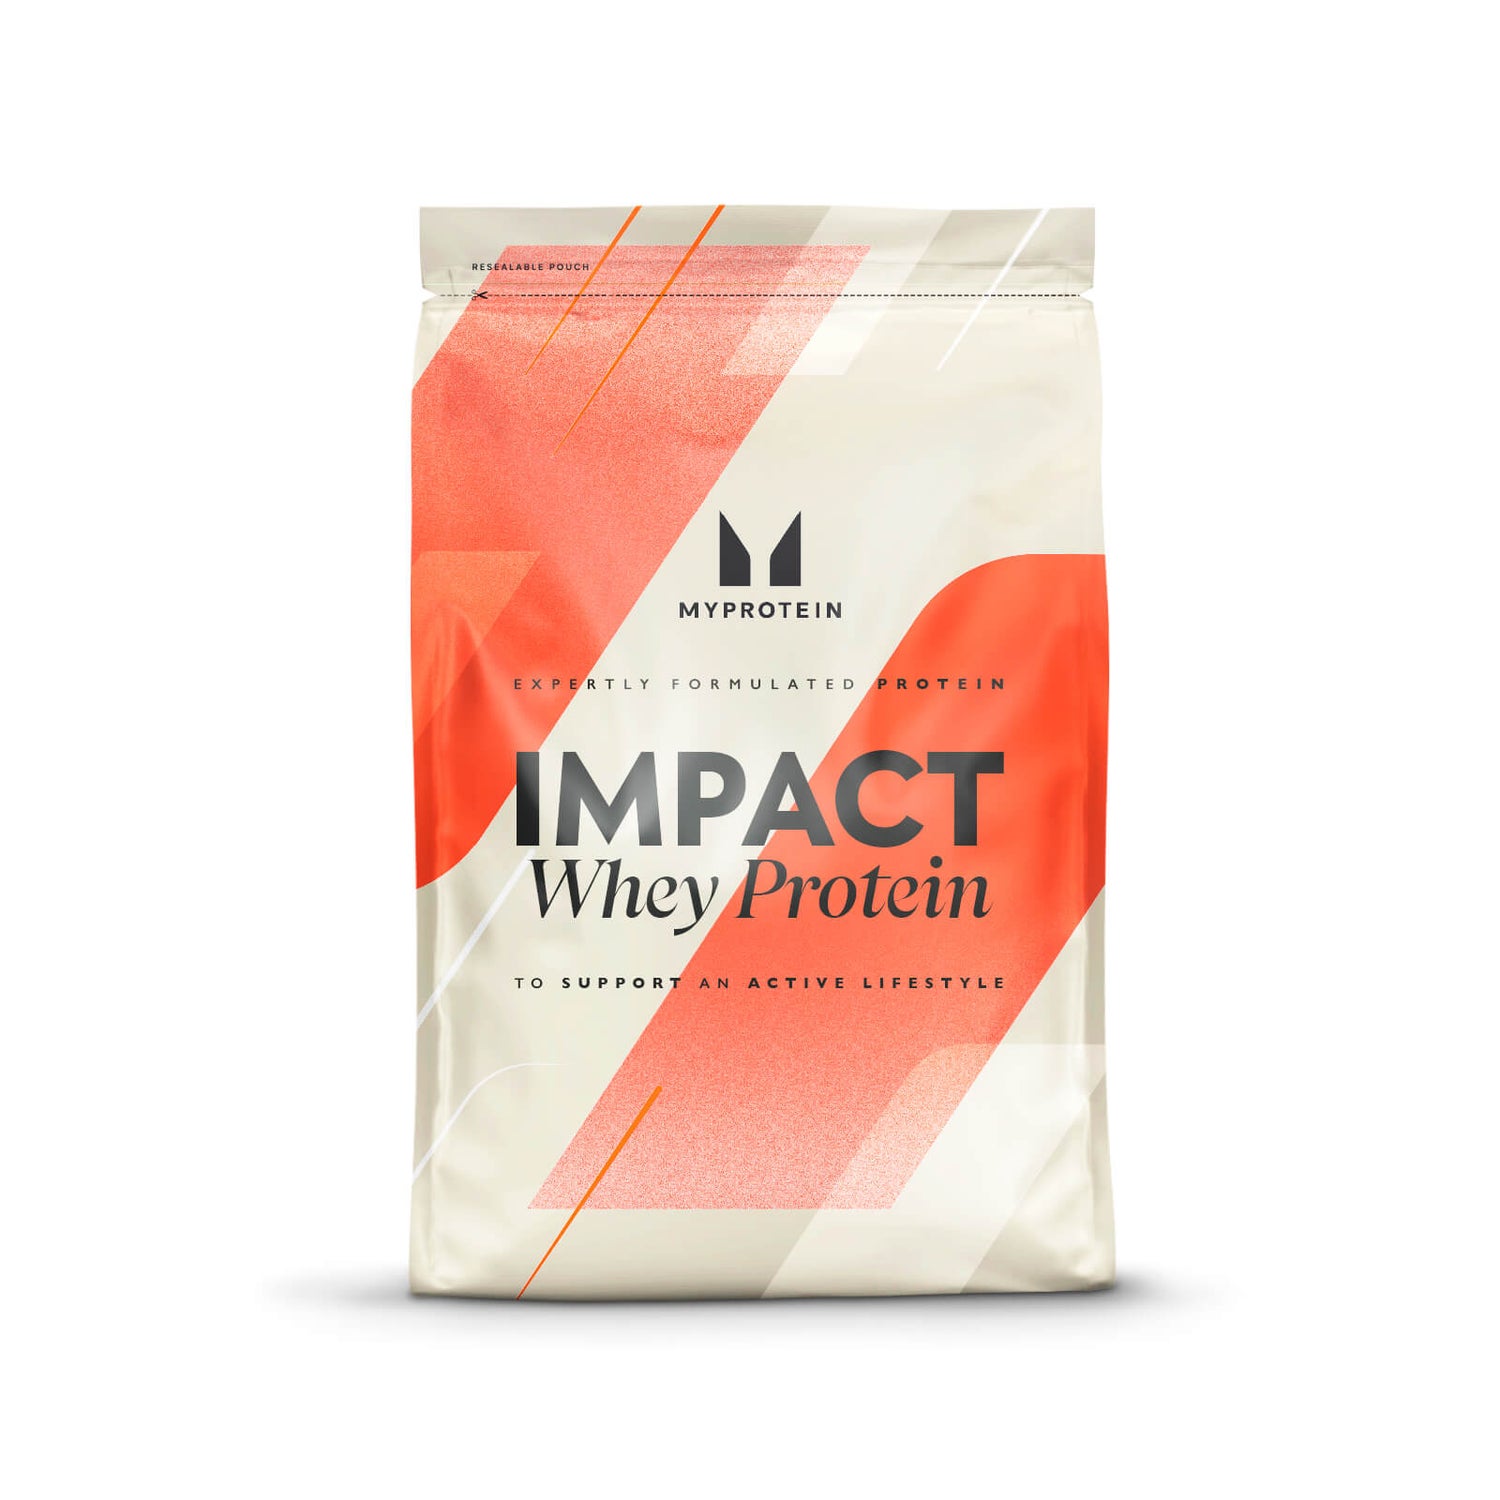 Impact Whey Protein - 1kg - Banana